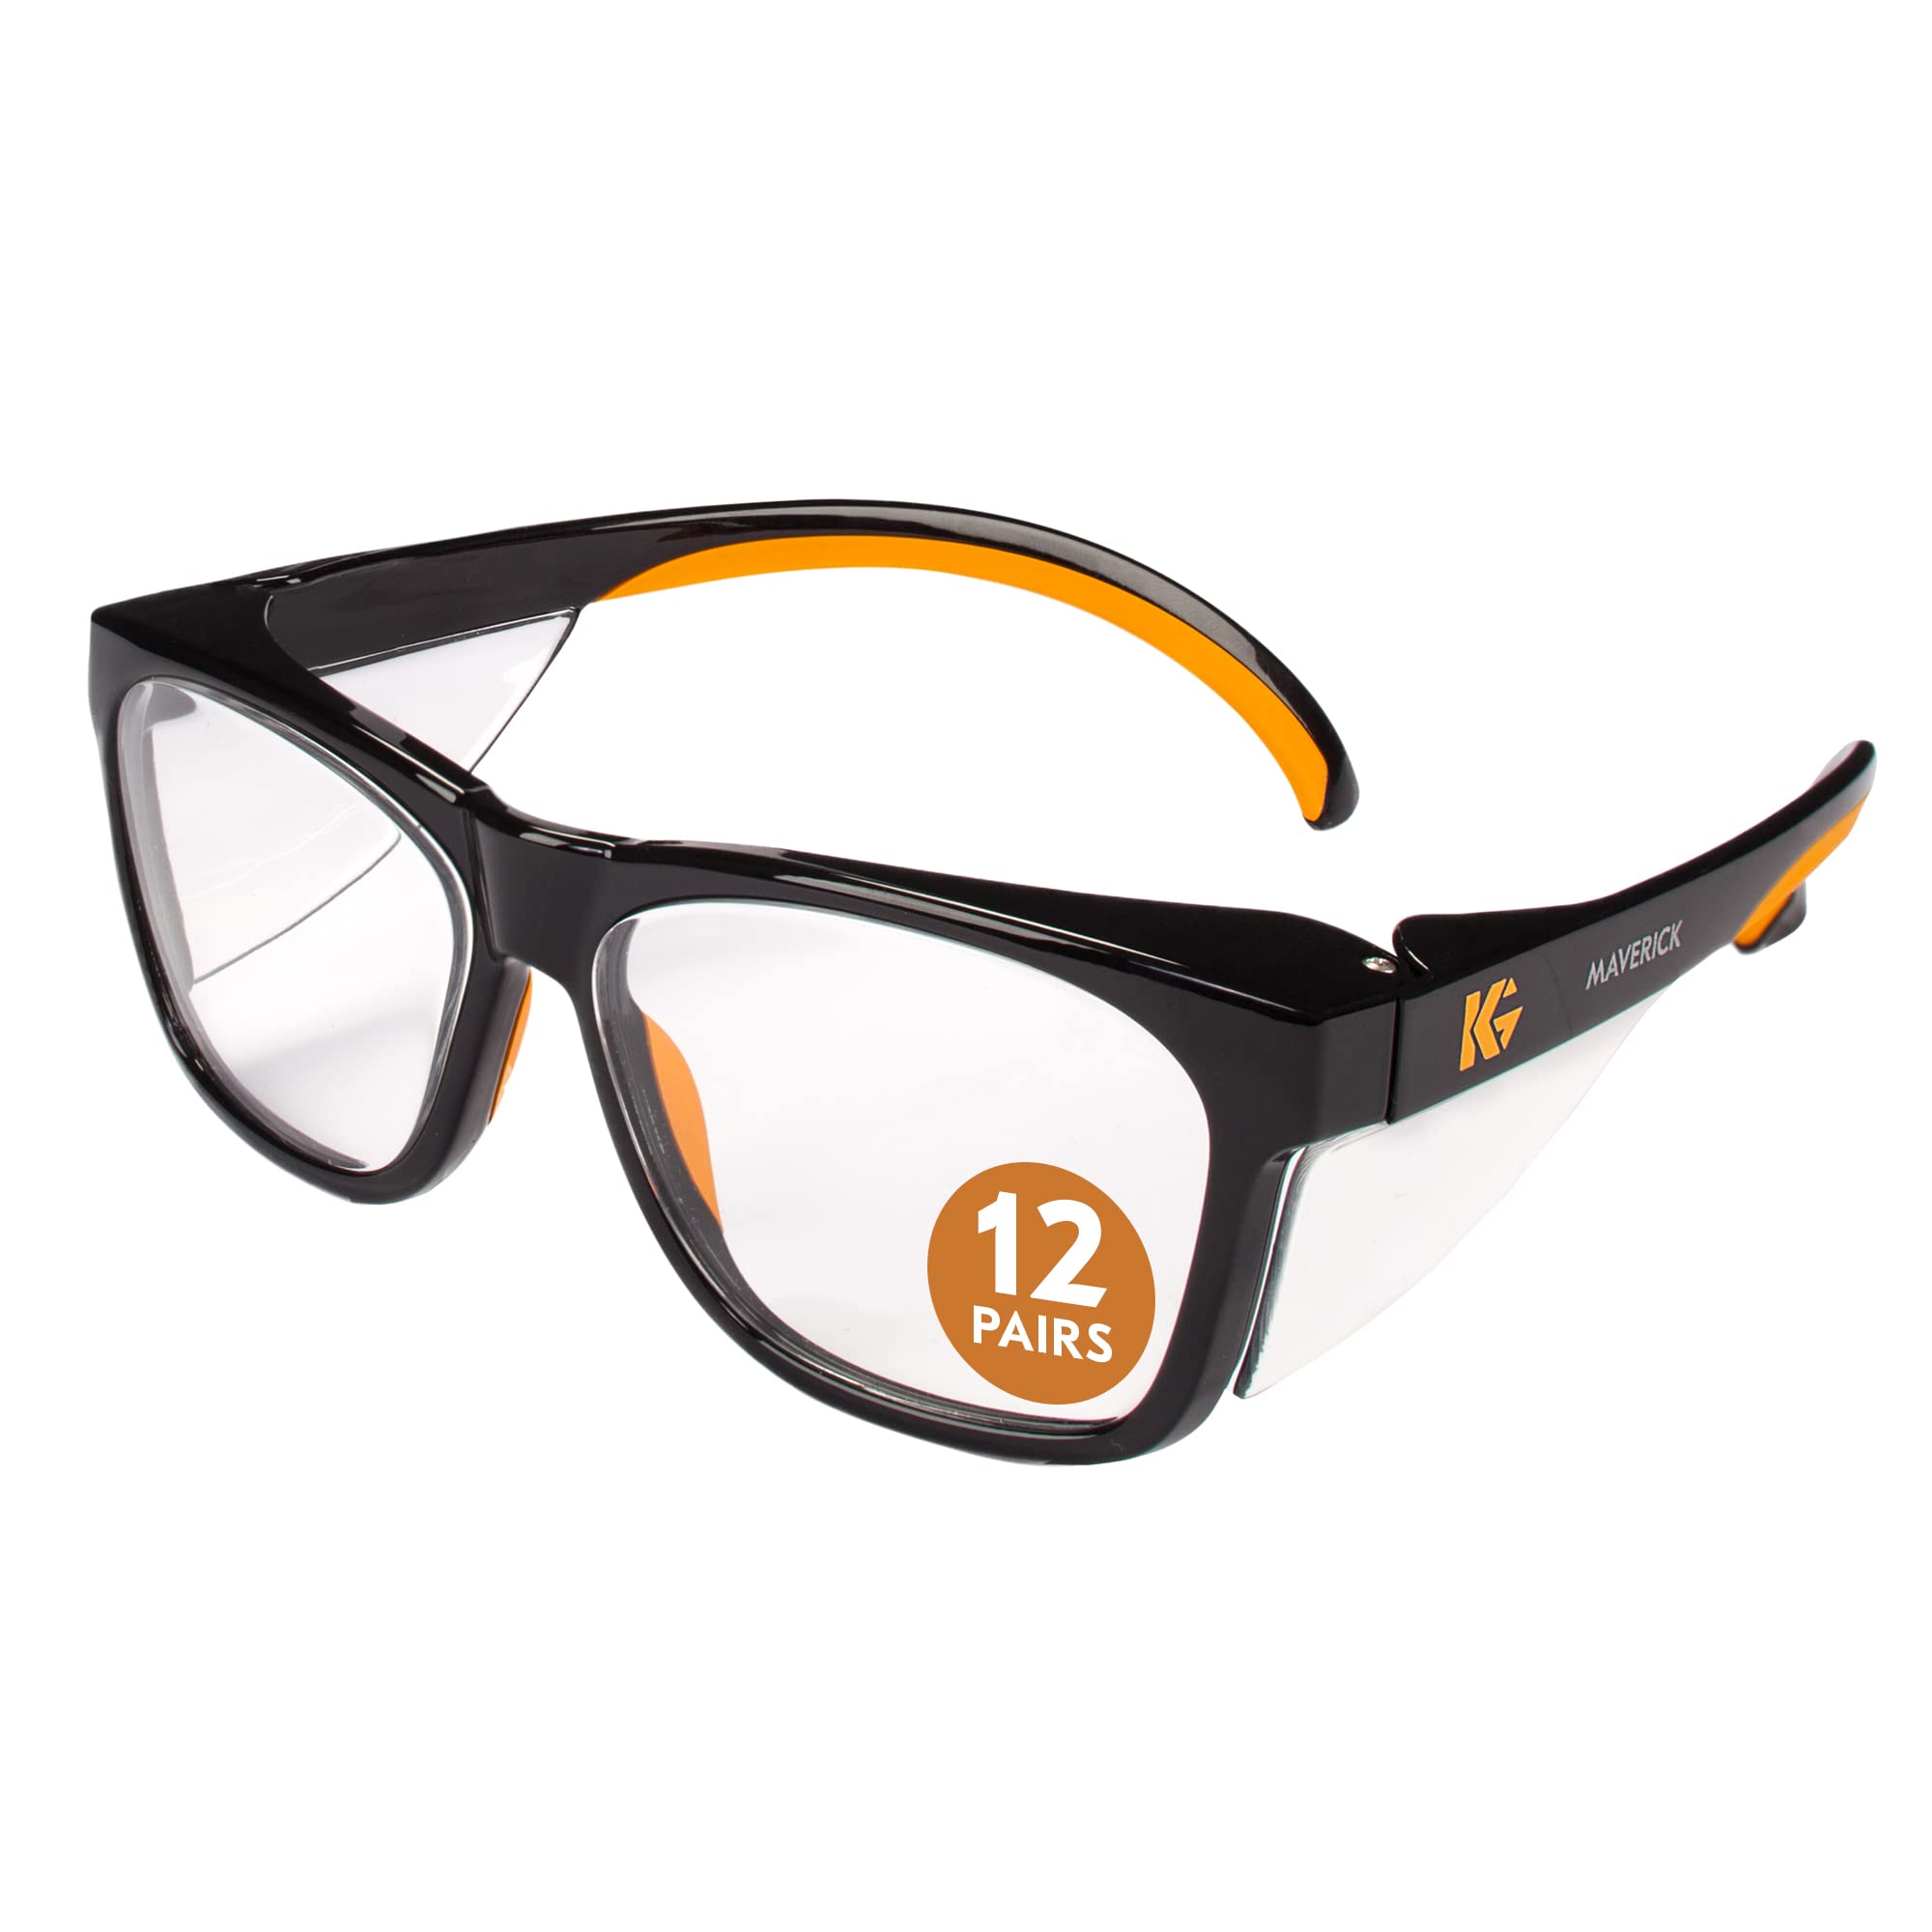 KLEENGUARD ™ V30 Maverick™ Safety Glasses (49312), with Anti-Glare Coating, Clear Lenses, Black Frame, Unisex for Men and Women (Qty 12)